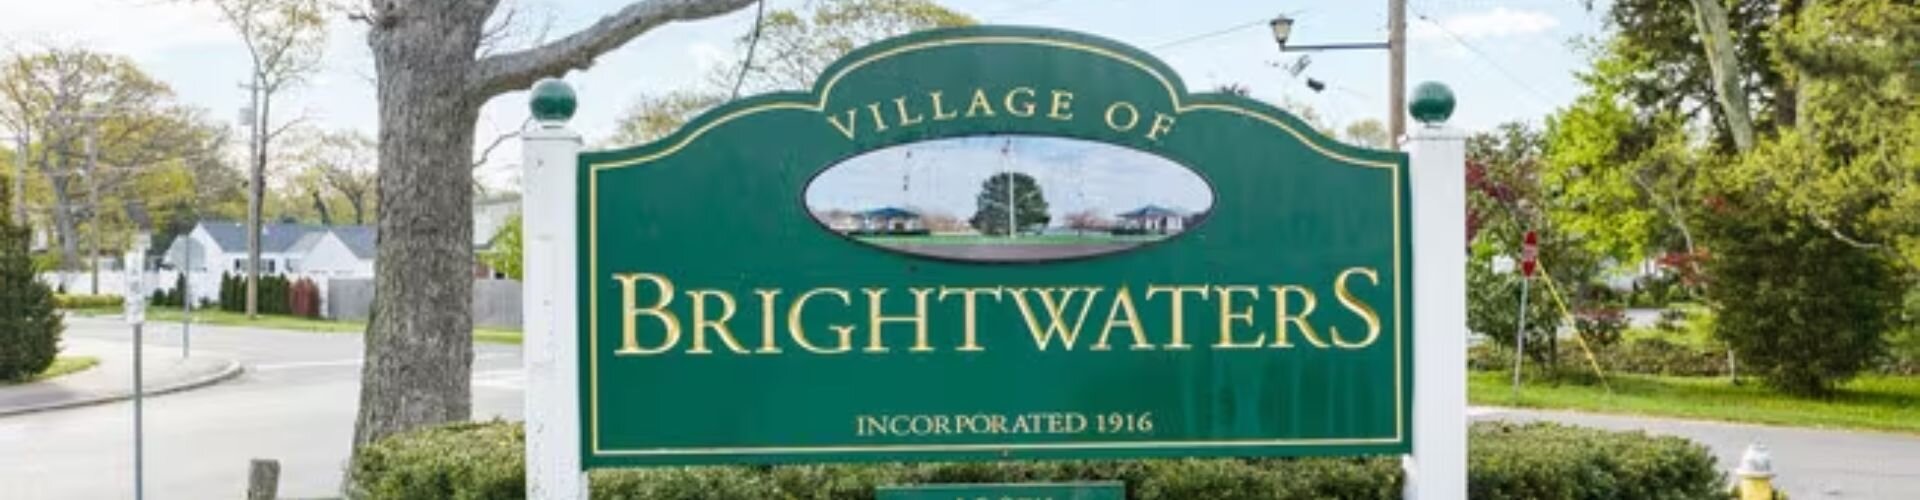 Brightwaters - Cash Buyers in Long Island